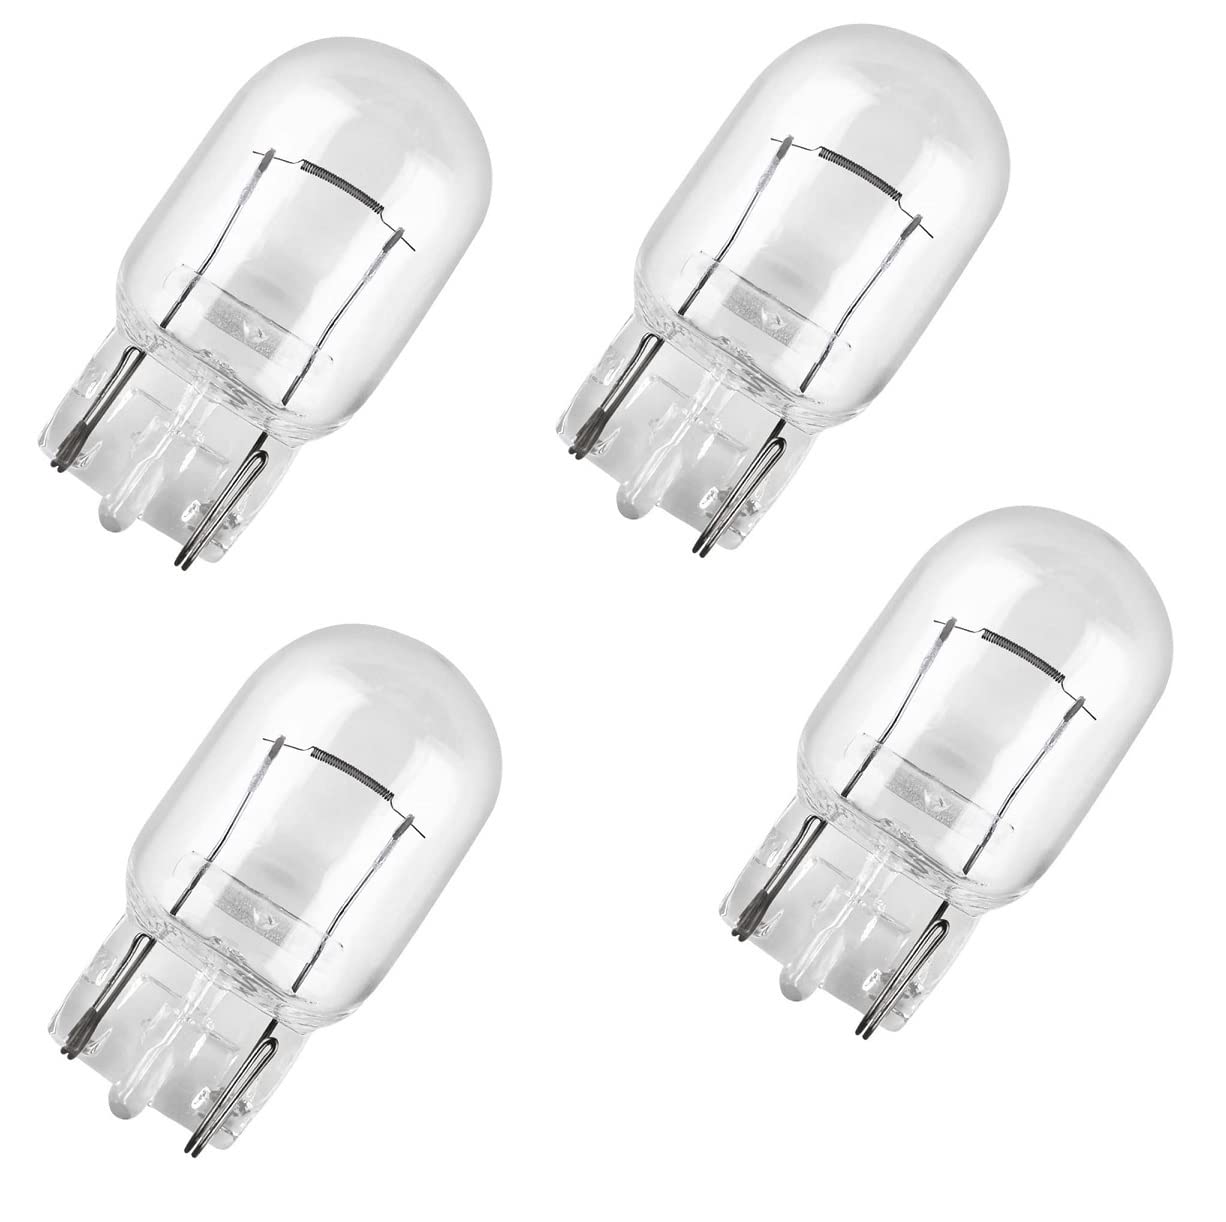 Maxxoni - T20 - W21/5W - 12V - CLEAR - Autolampen Glassockel Halogen Lampe KFZ Beleuchtung Stückzahl nach Wahl (2) von Maxxoni